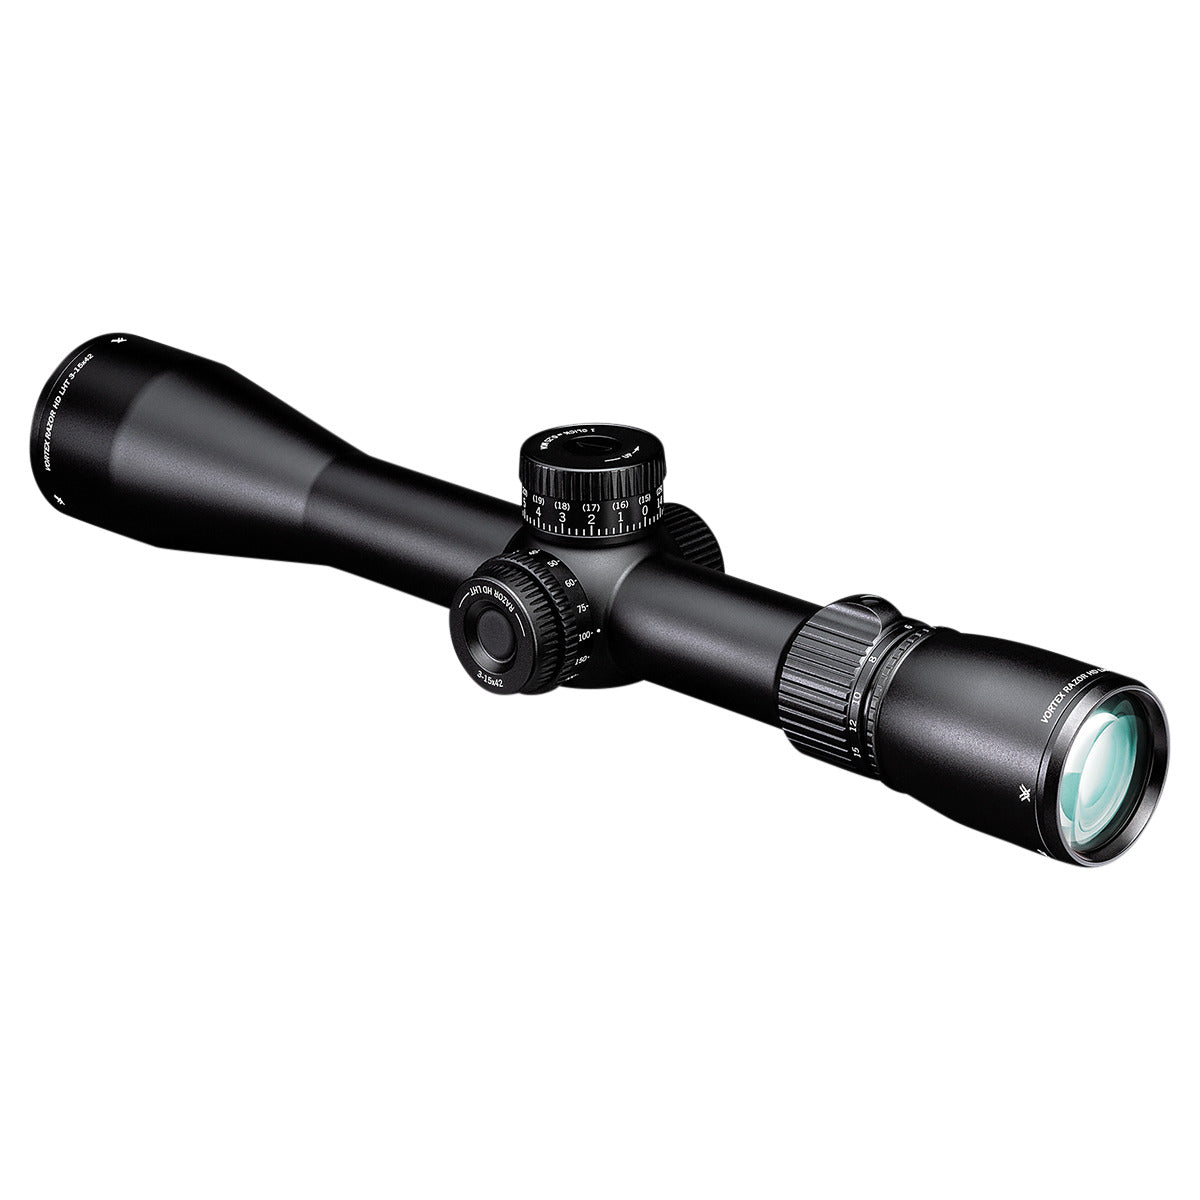 Vortex Razor LHT 3-15x42 HSR-5i MOA Riflescope in Vortex Razor LHT 3-15x42 HSR-5i MOA Riflescope by Vortex Optics | Optics - goHUNT Shop by GOHUNT | Vortex Optics - GOHUNT Shop